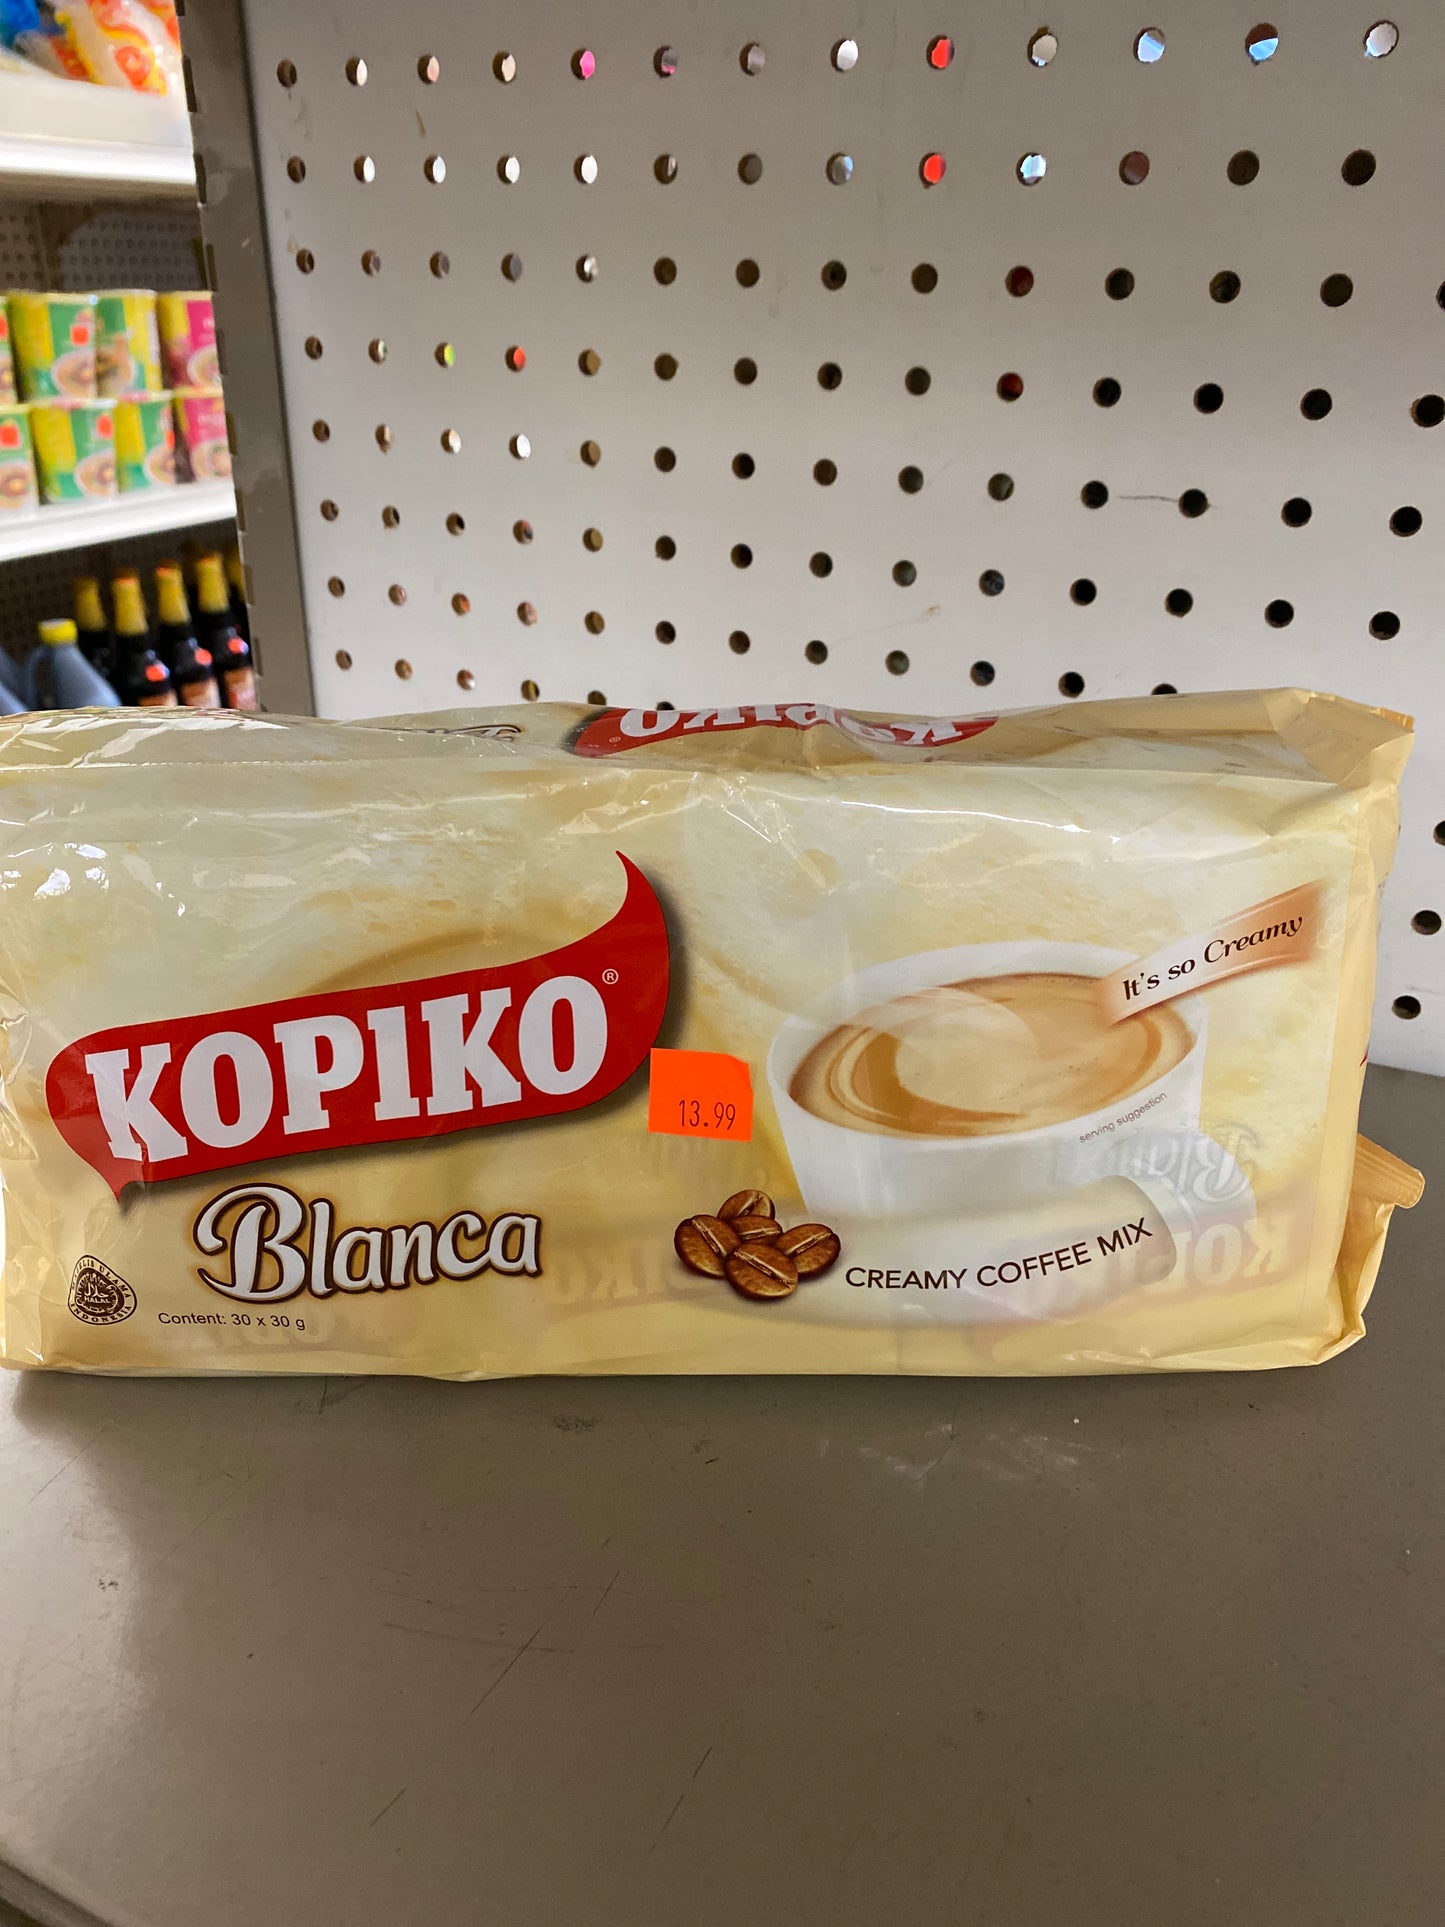 Kopiko Blanca Creamy Coffee Mix - 30 pack